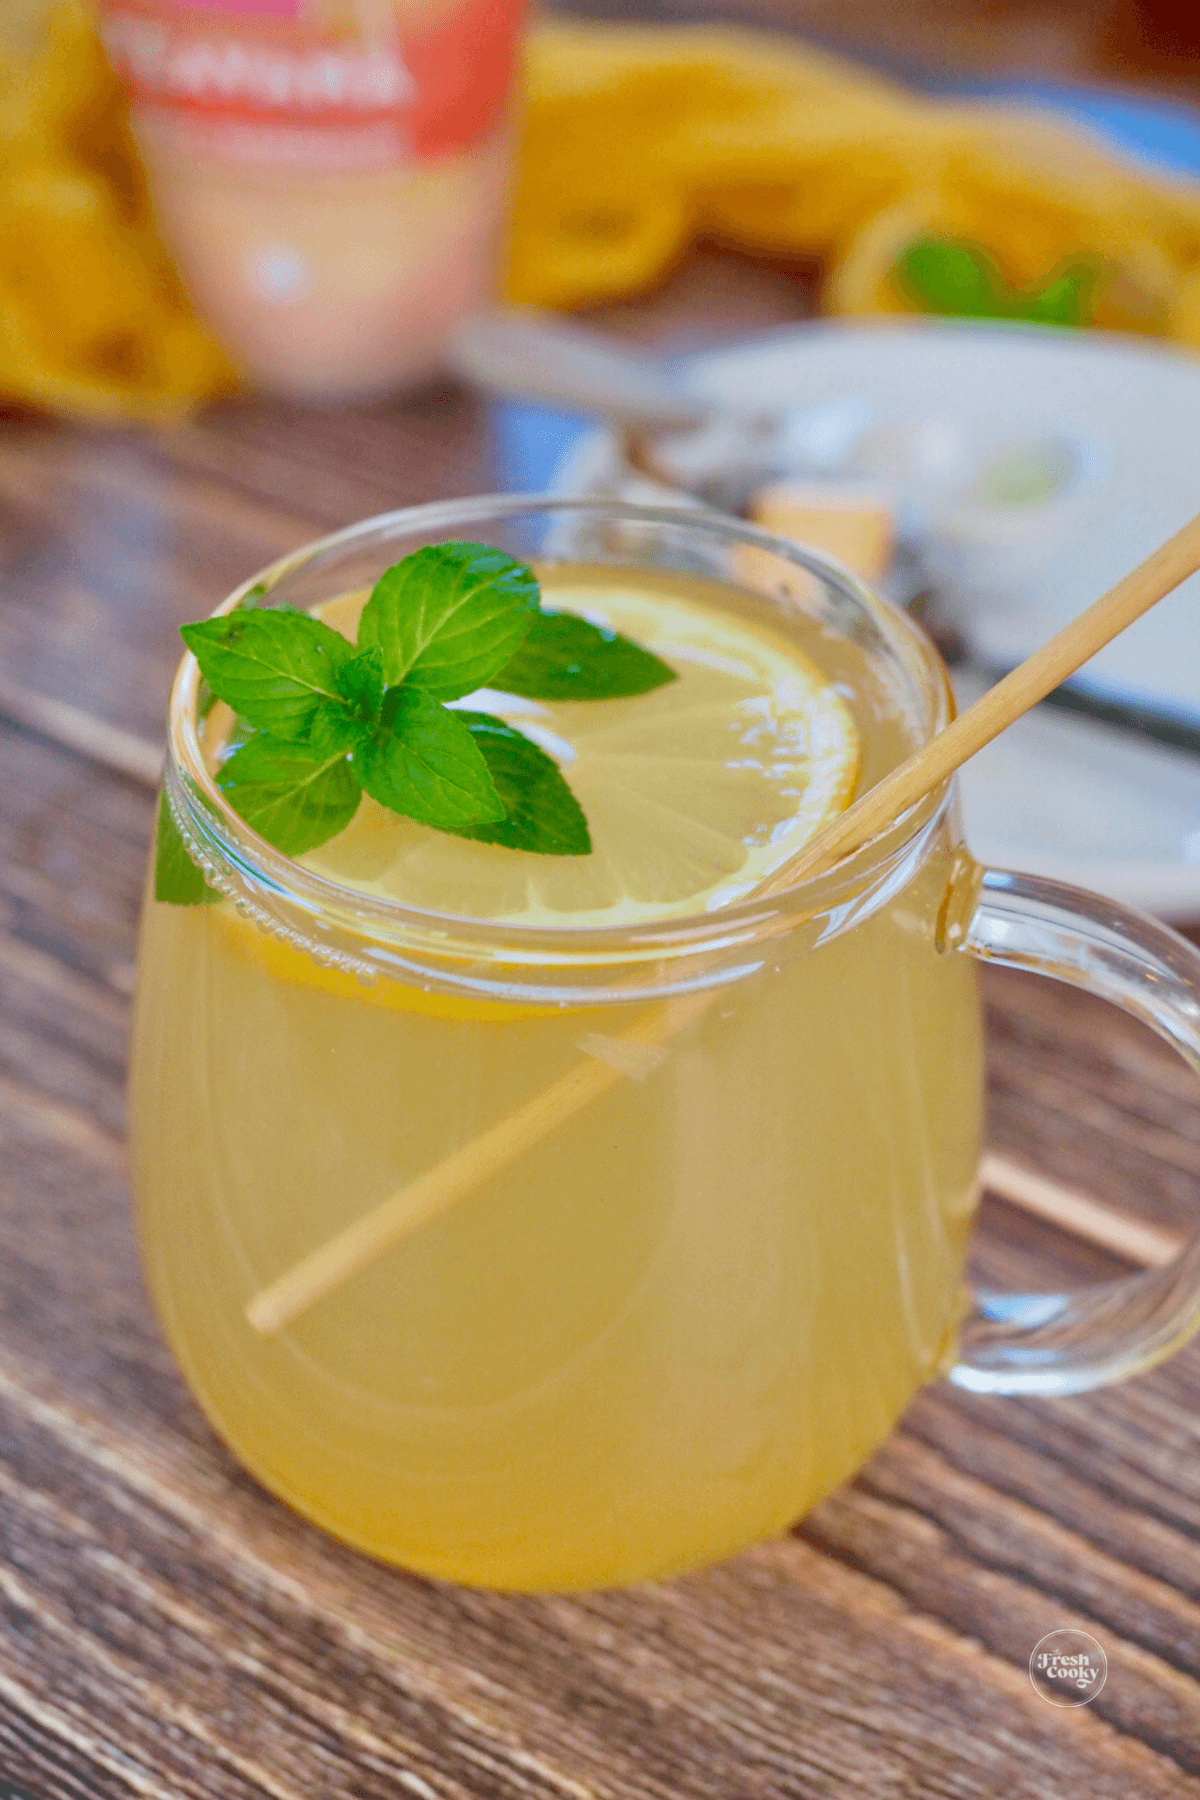 Teavana sore throat soother tea in a glass mug with lemon wheel, fresh mint and a stir stick.